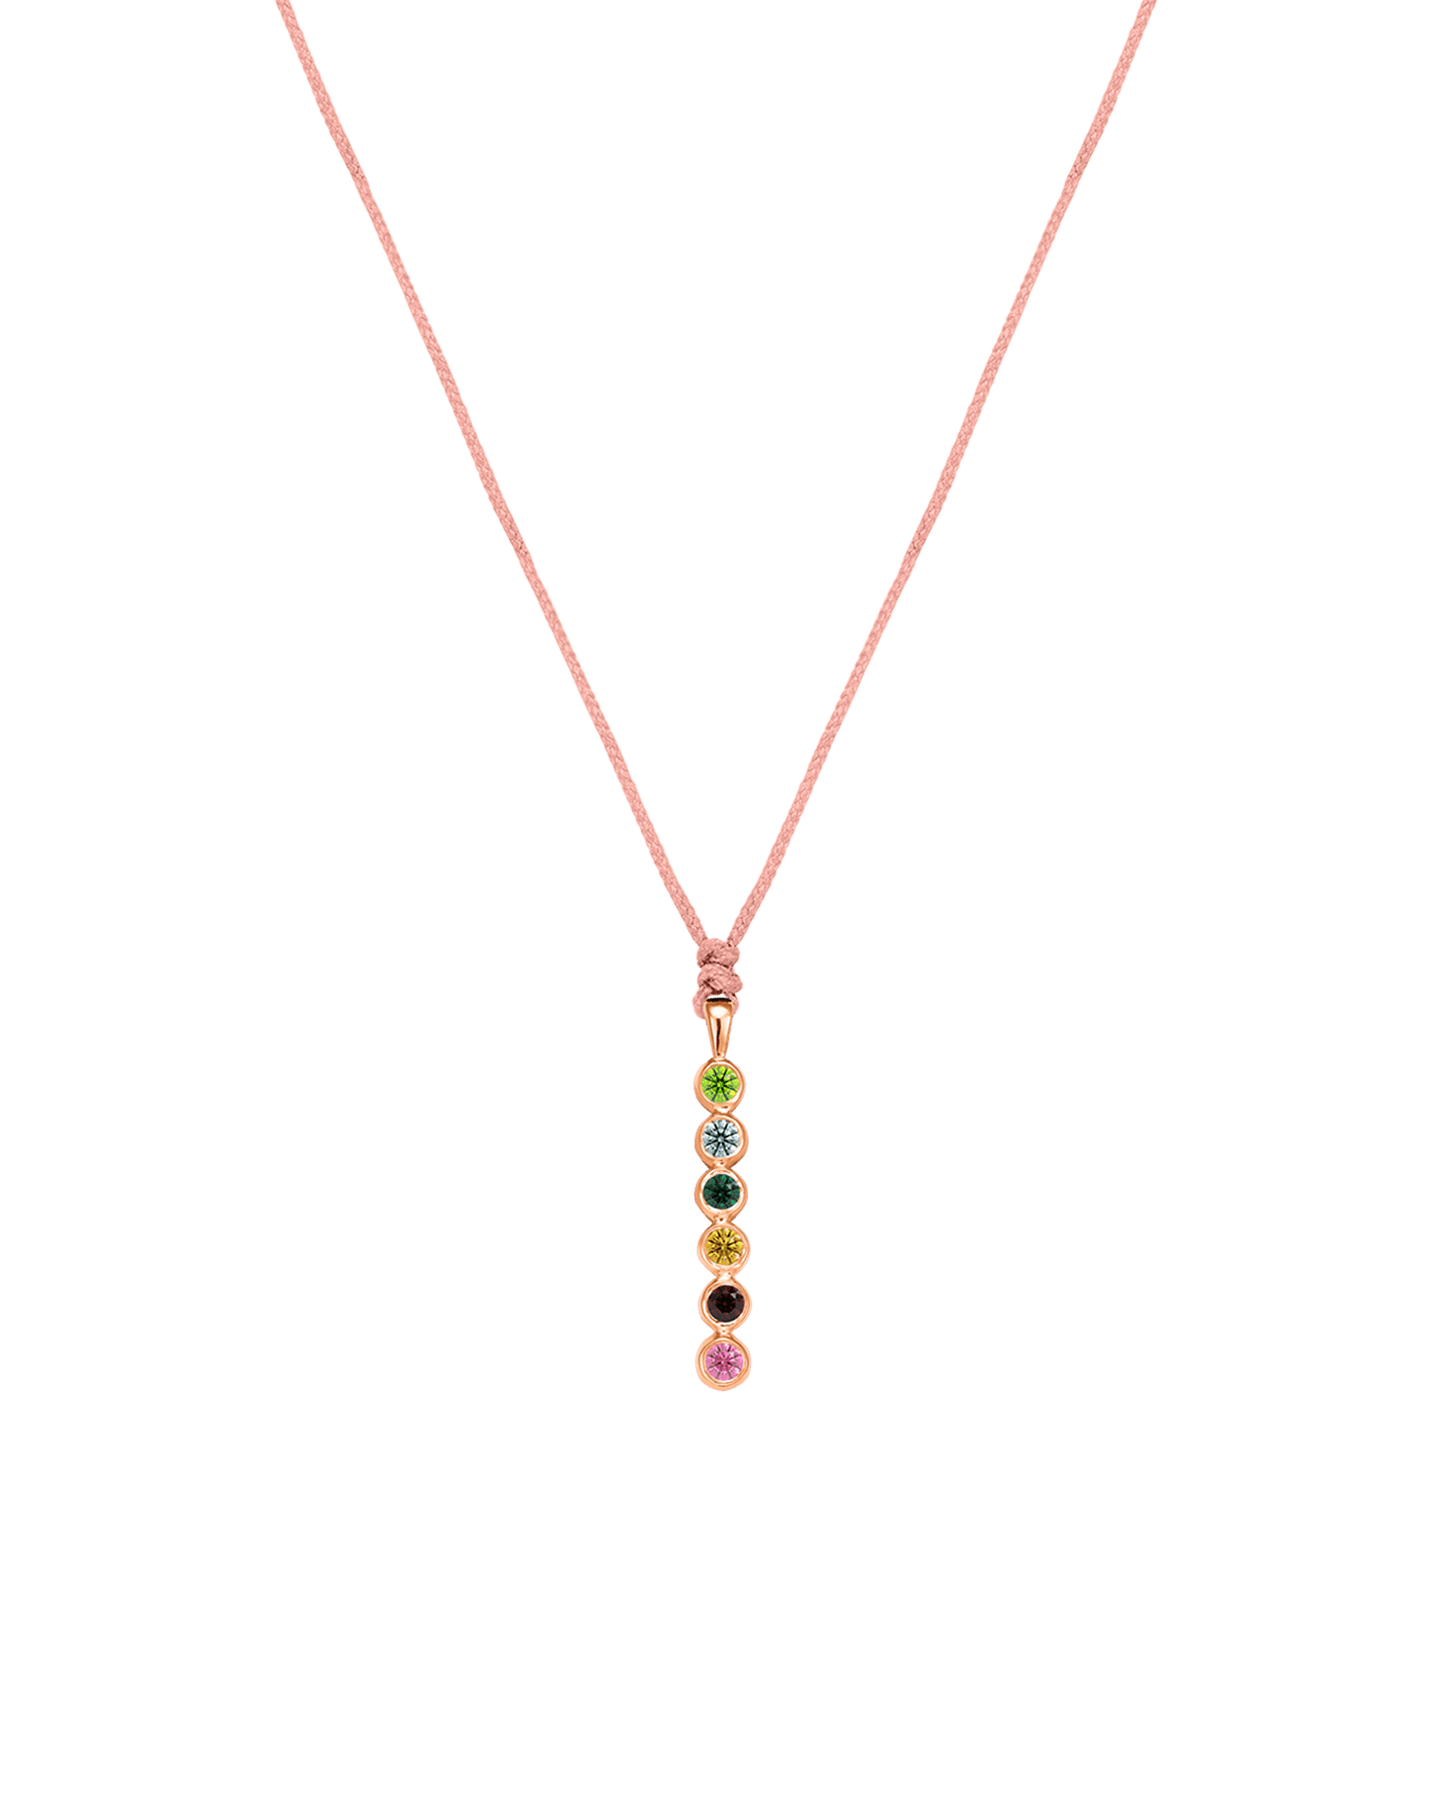 The Birthstones Bar Necklace - 14K Rose Gold Necklaces 14K Solid Gold Pink 2 